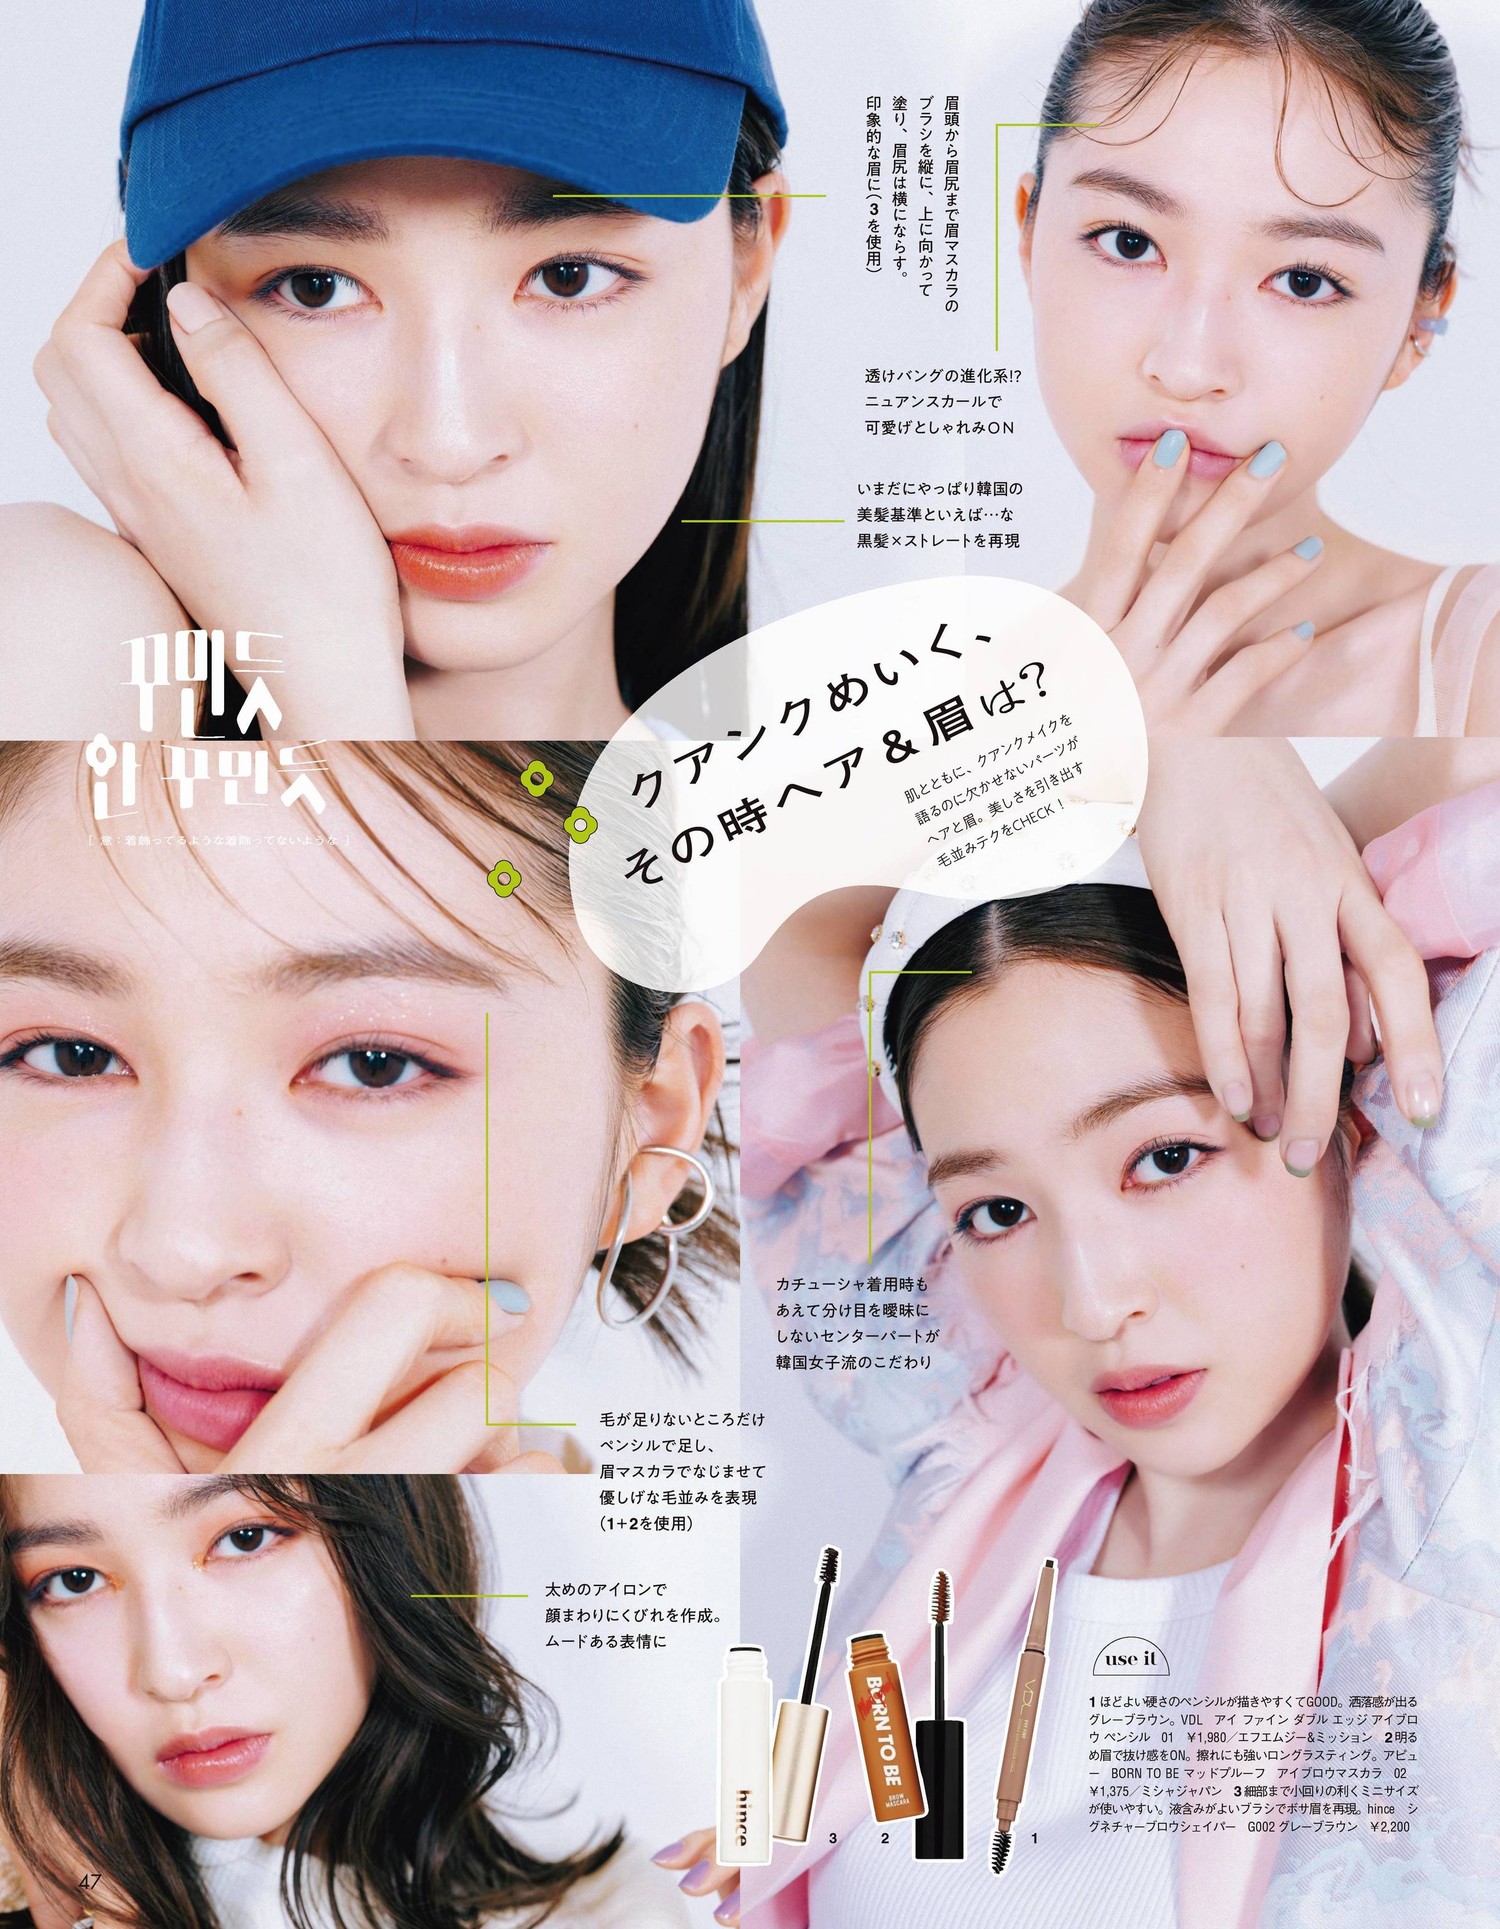 Seira Jonishi 上西星来, aR (アール) Magazine 2022.05